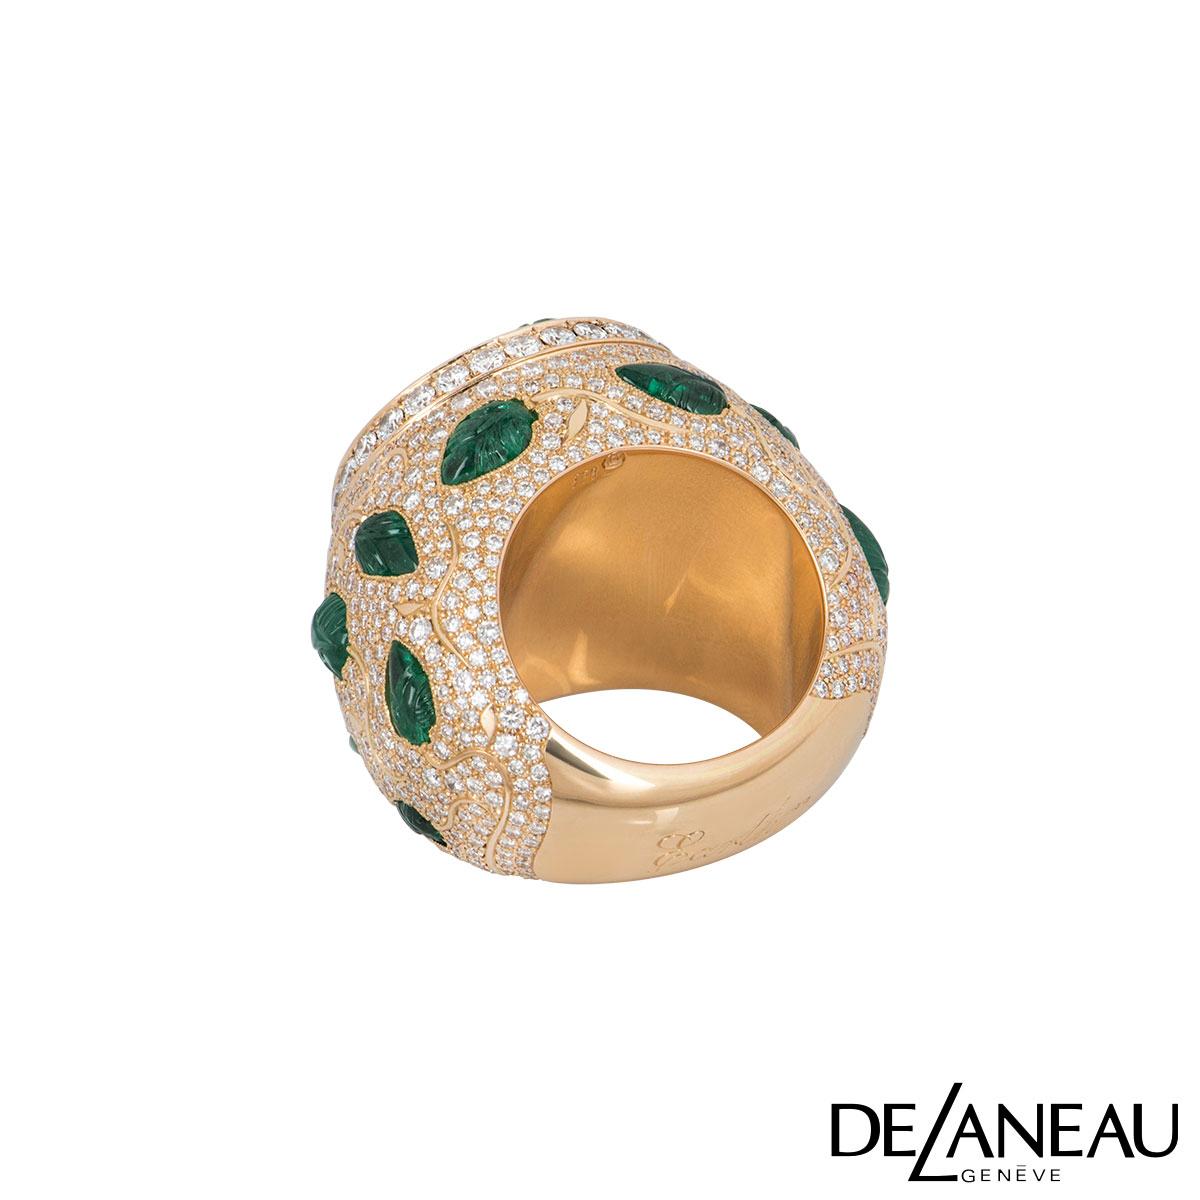 Rare DeLaneau Rose Gold, Diamond and Emerald Ring Watch 7.60 Carat IGR Certified 1